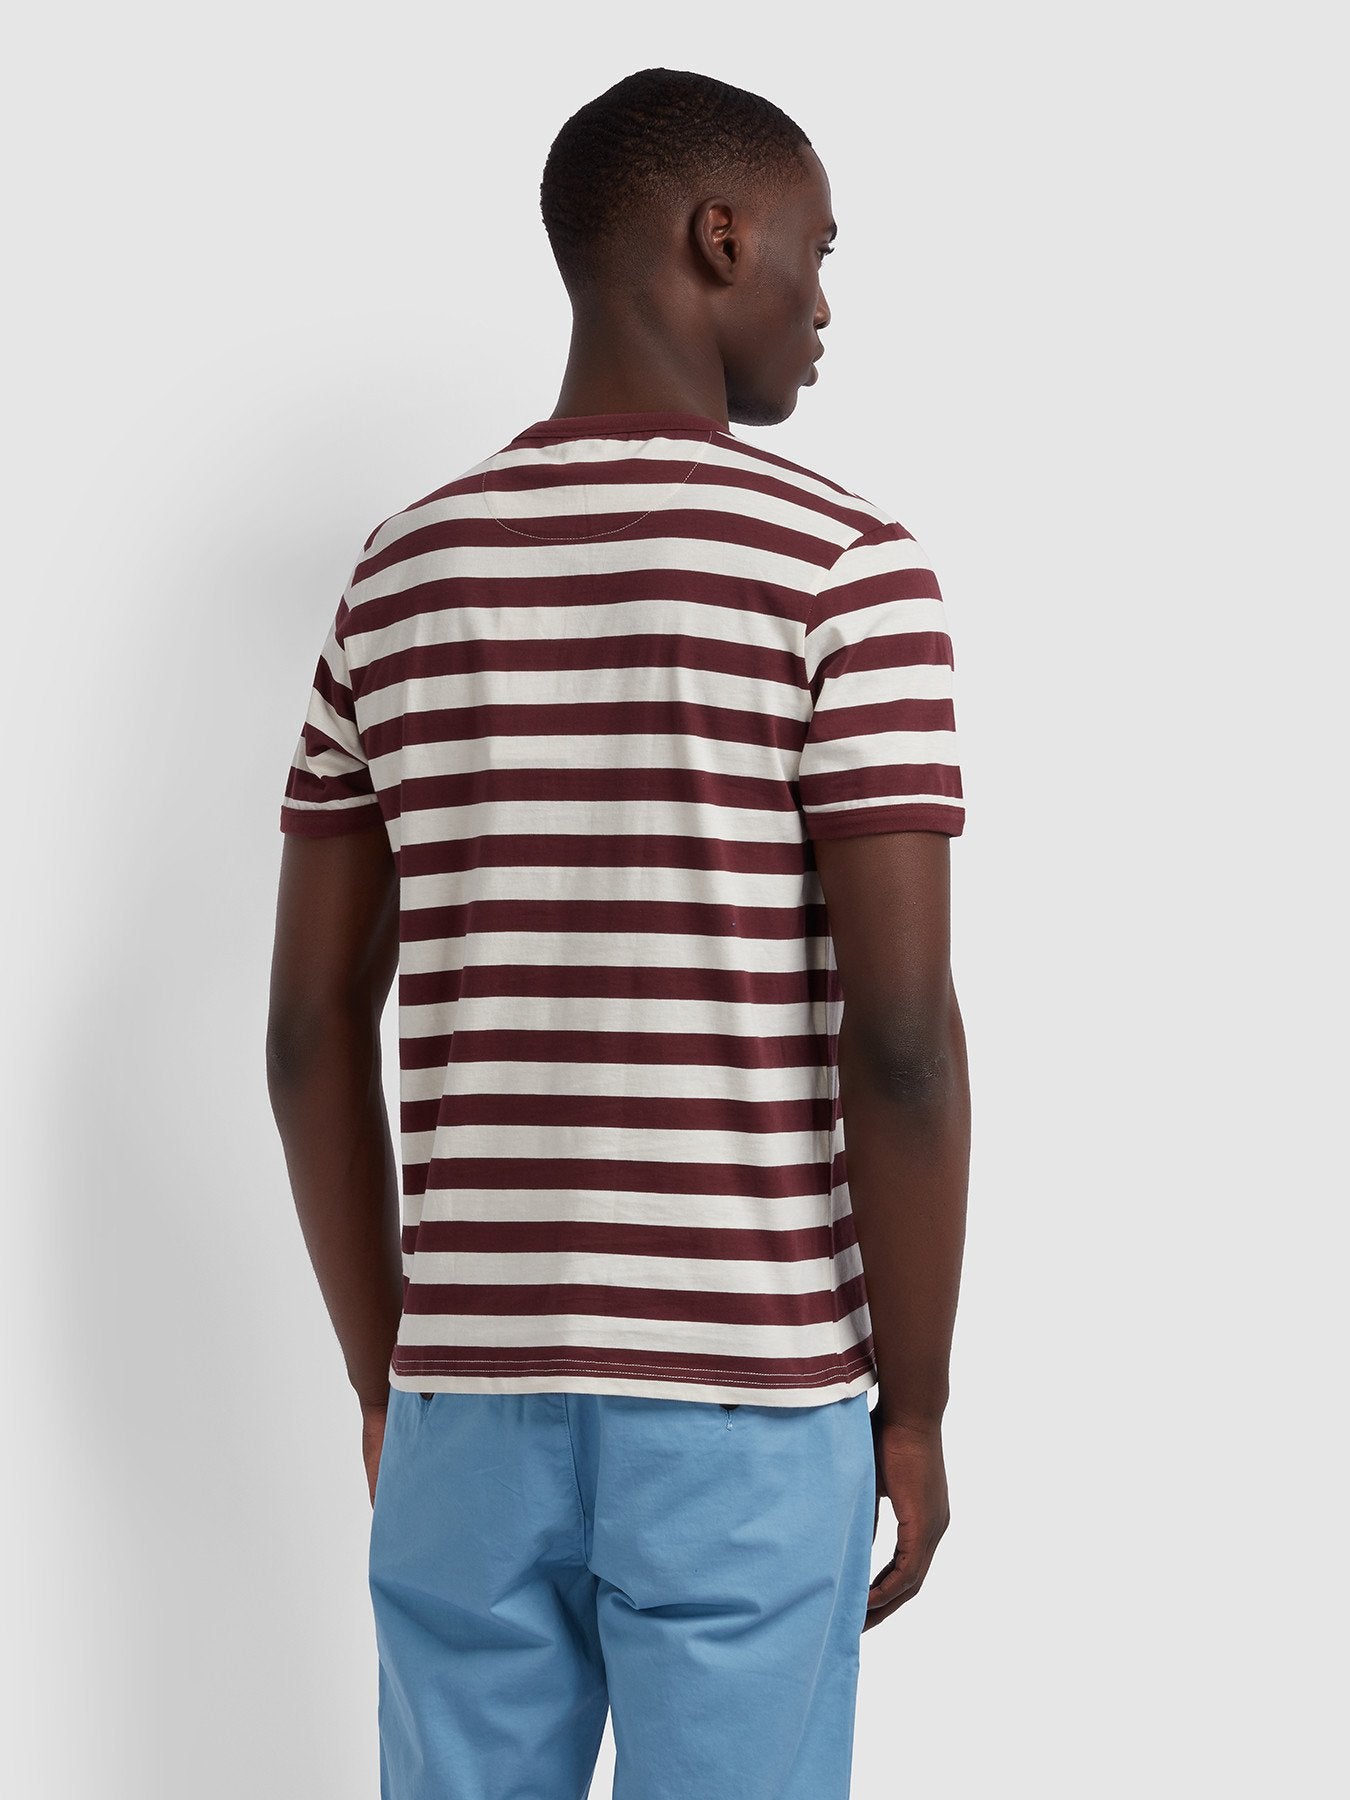 Farah Belgrove Striped T-Shirt in Farah Red